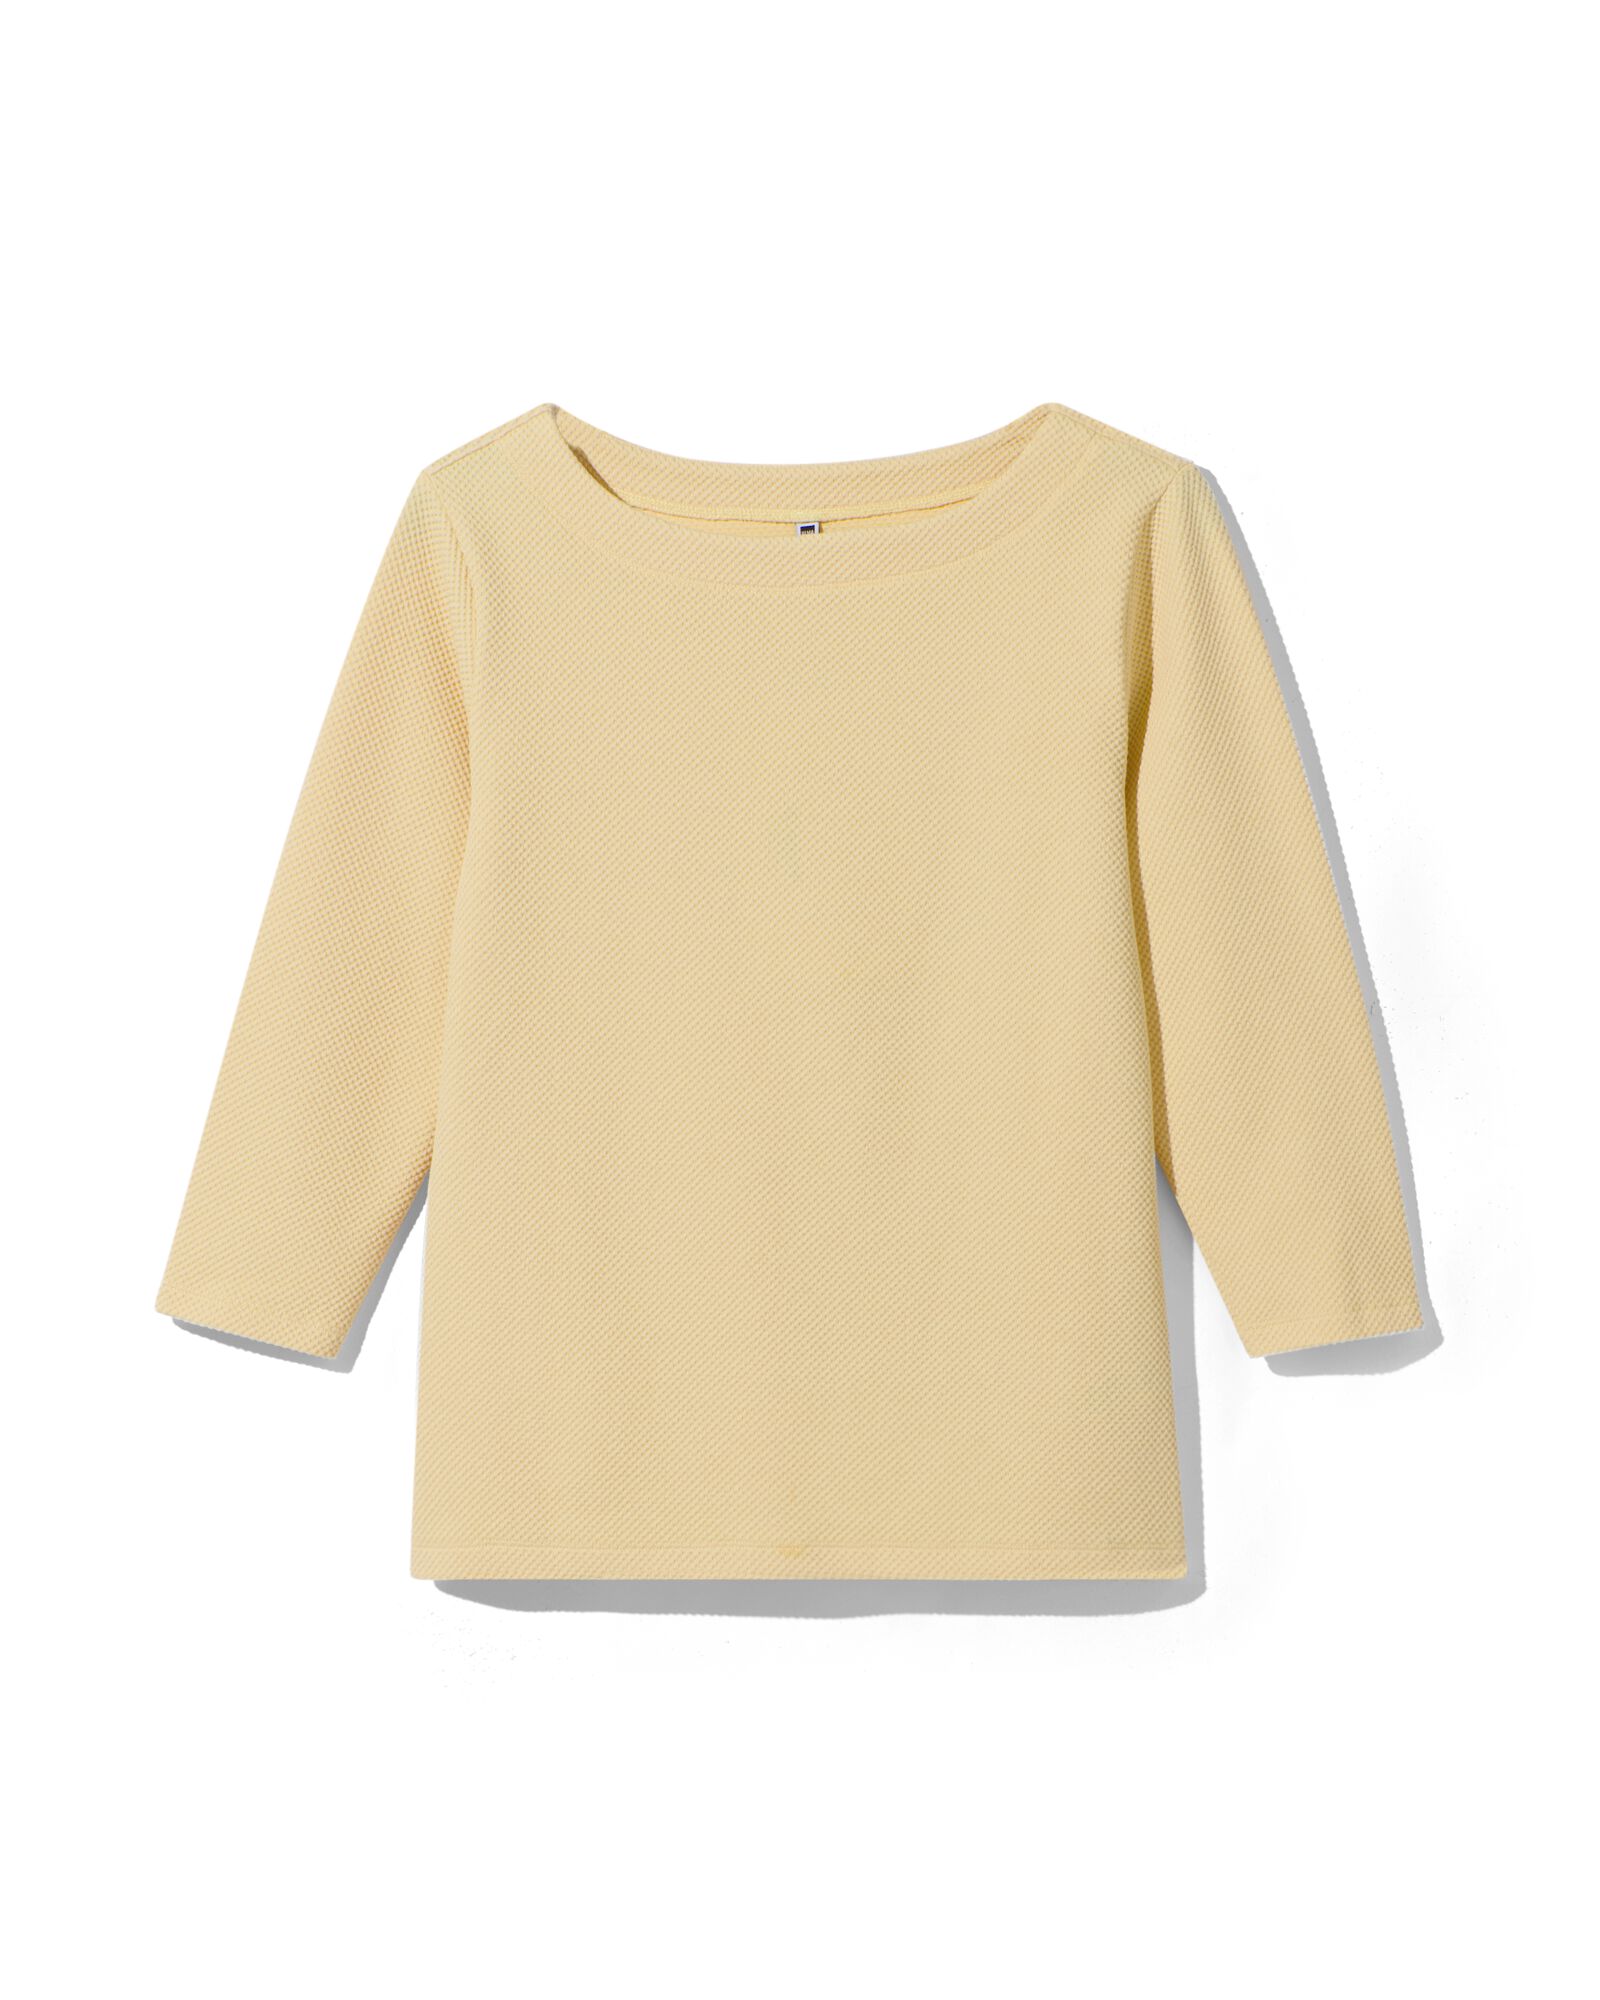 Damen-Shirt Kacey, Struktur gelb gelb - 36296260YELLOW - HEMA